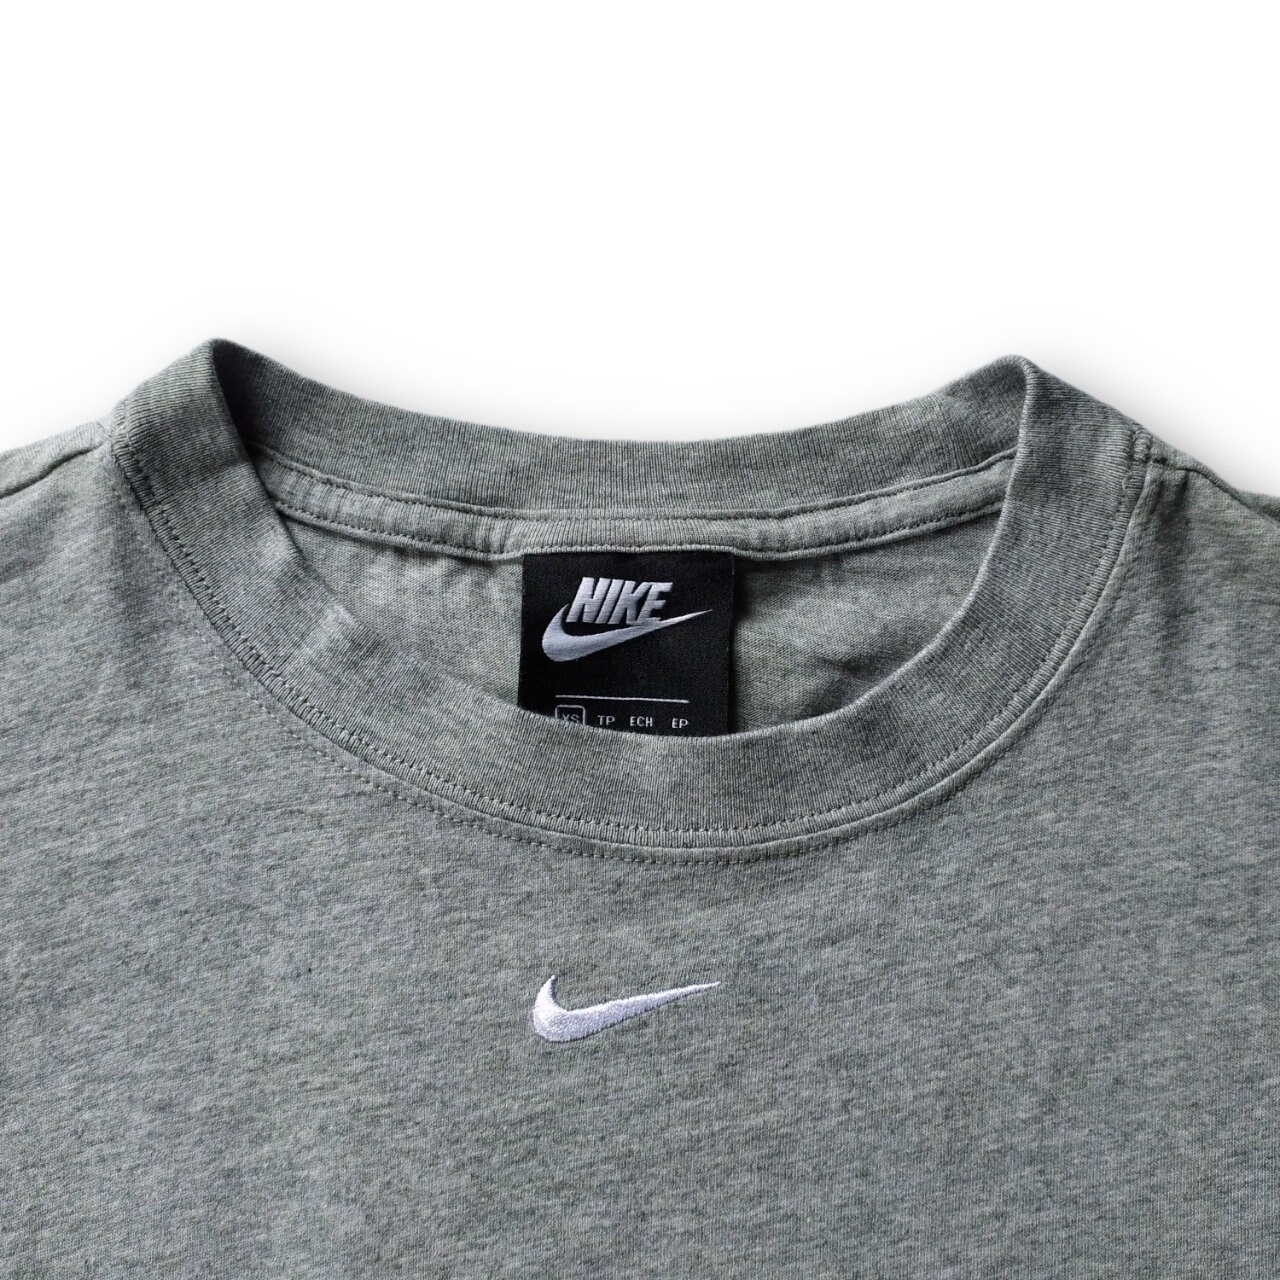 Nike central center swoosh Travis scott t shirt | Etsy